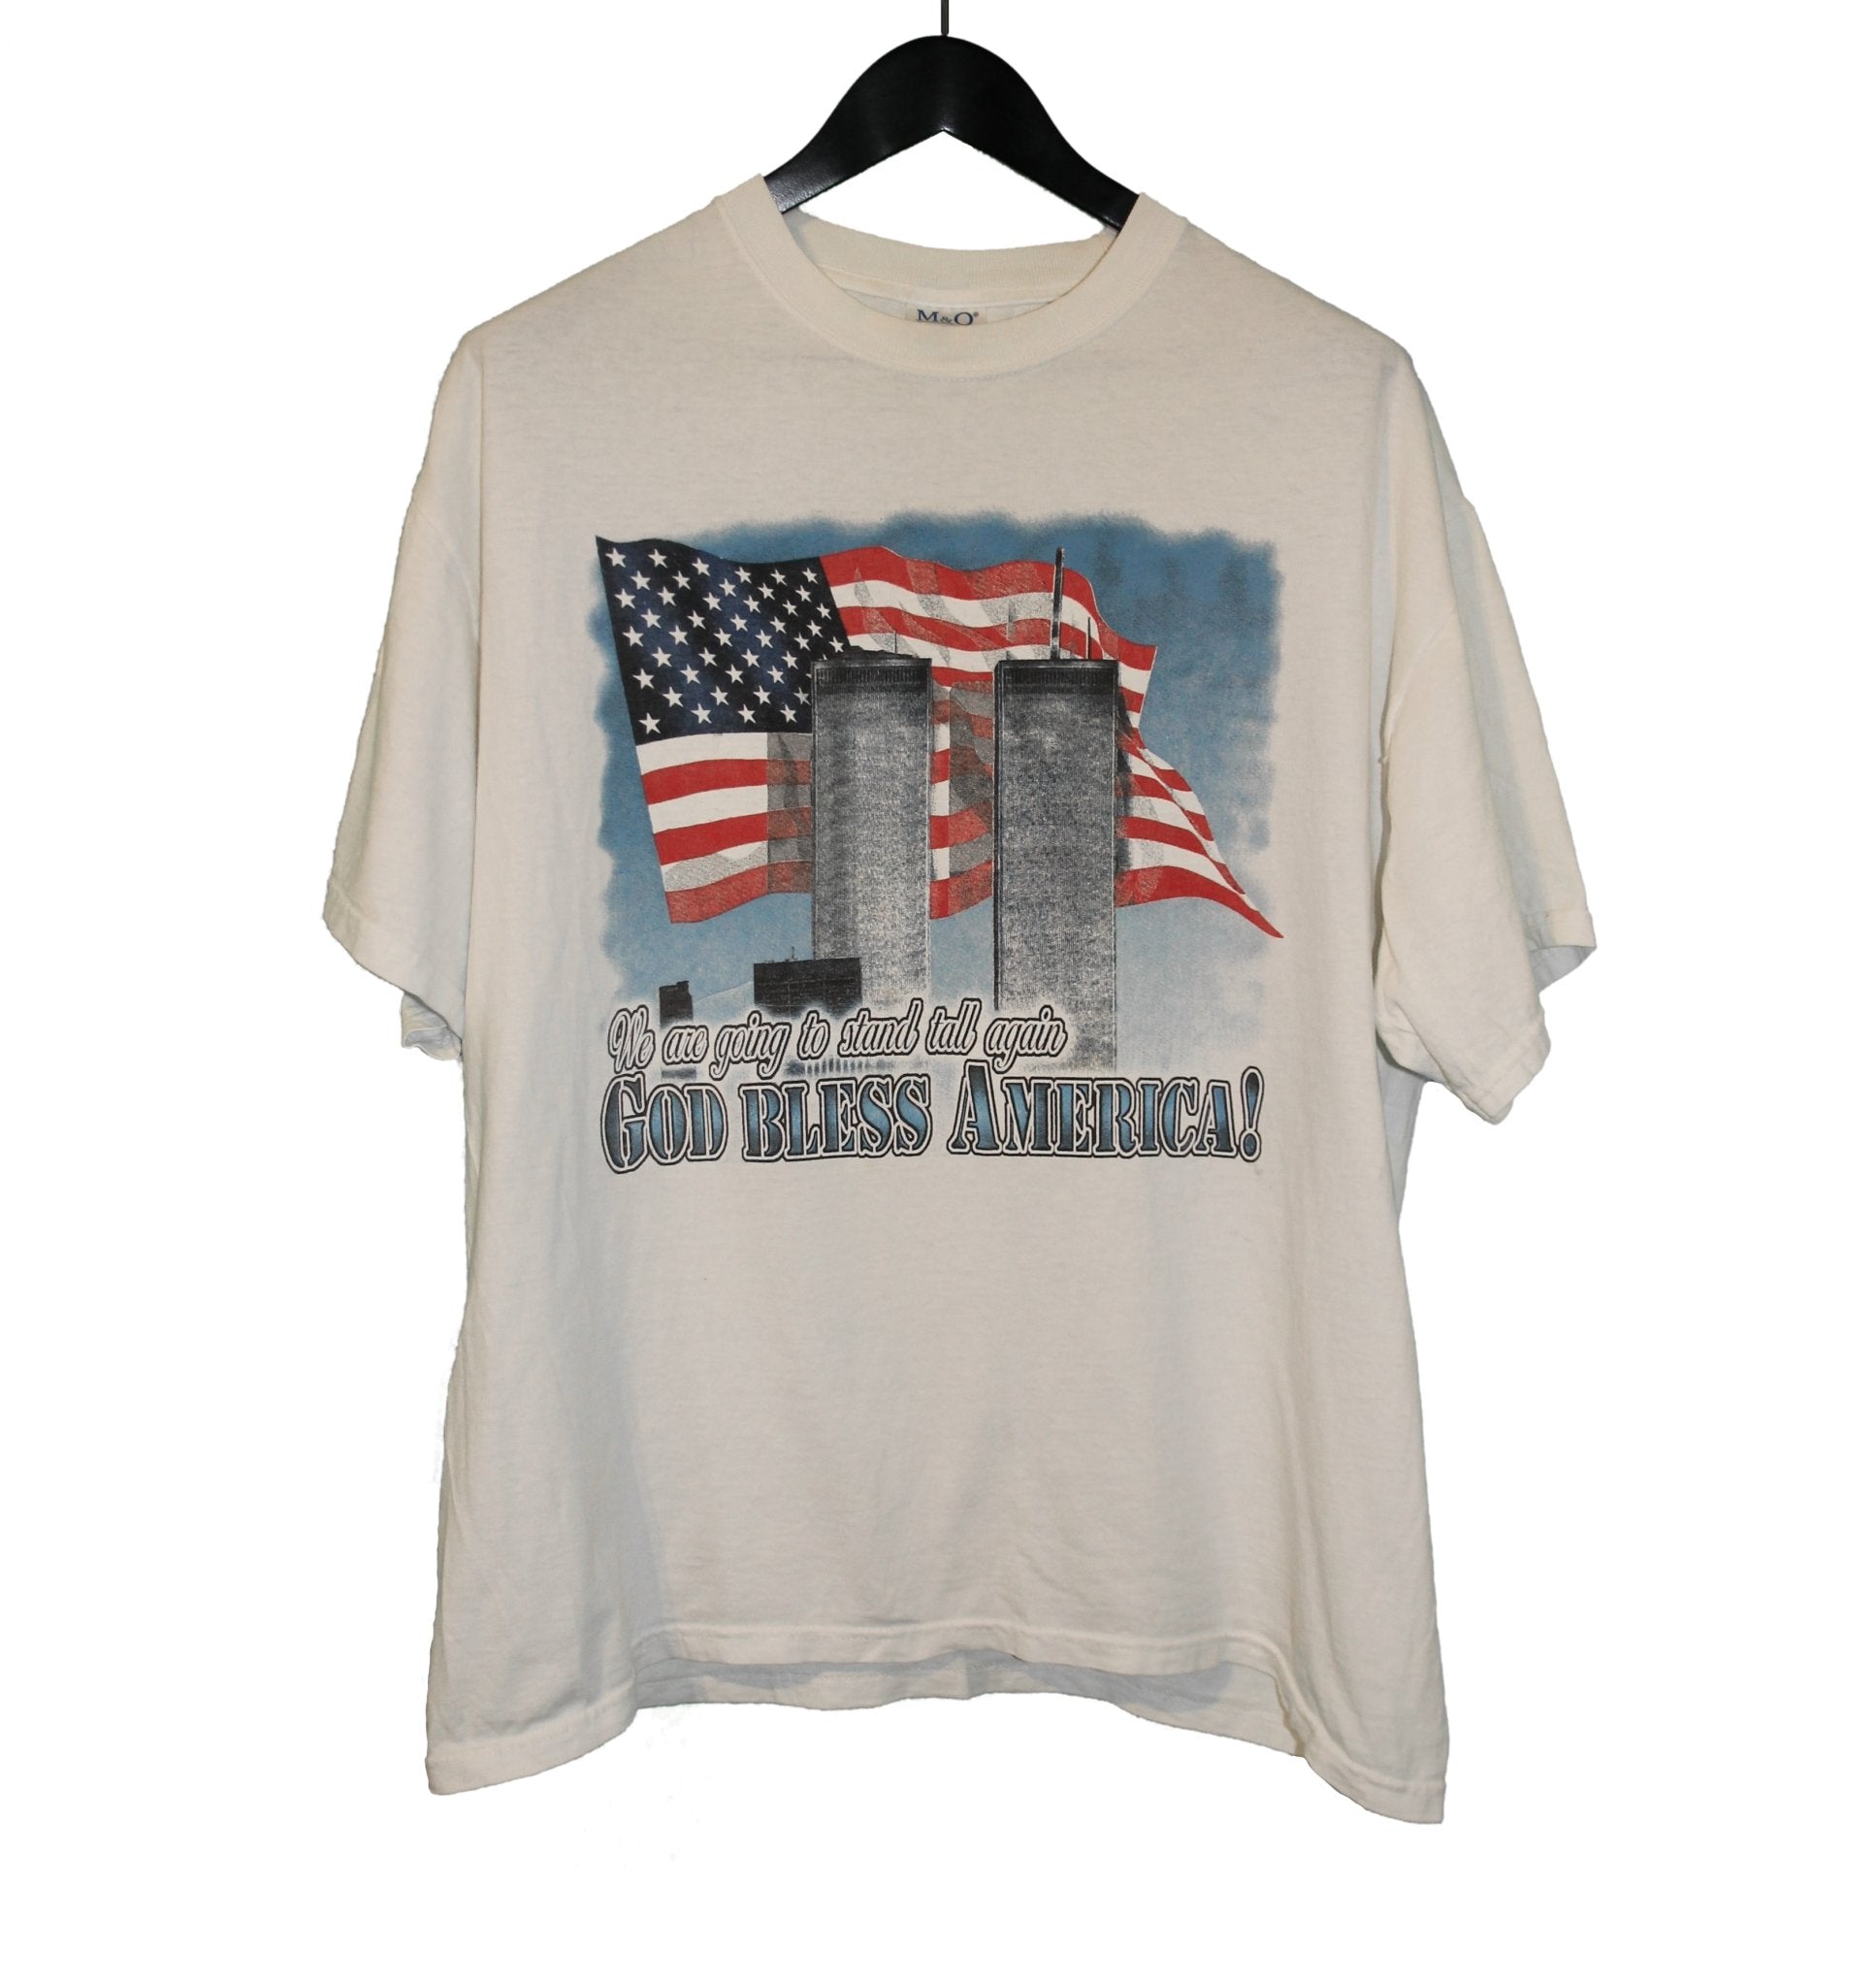 September 11 Memorial God Bless America Shirt - Faded AU